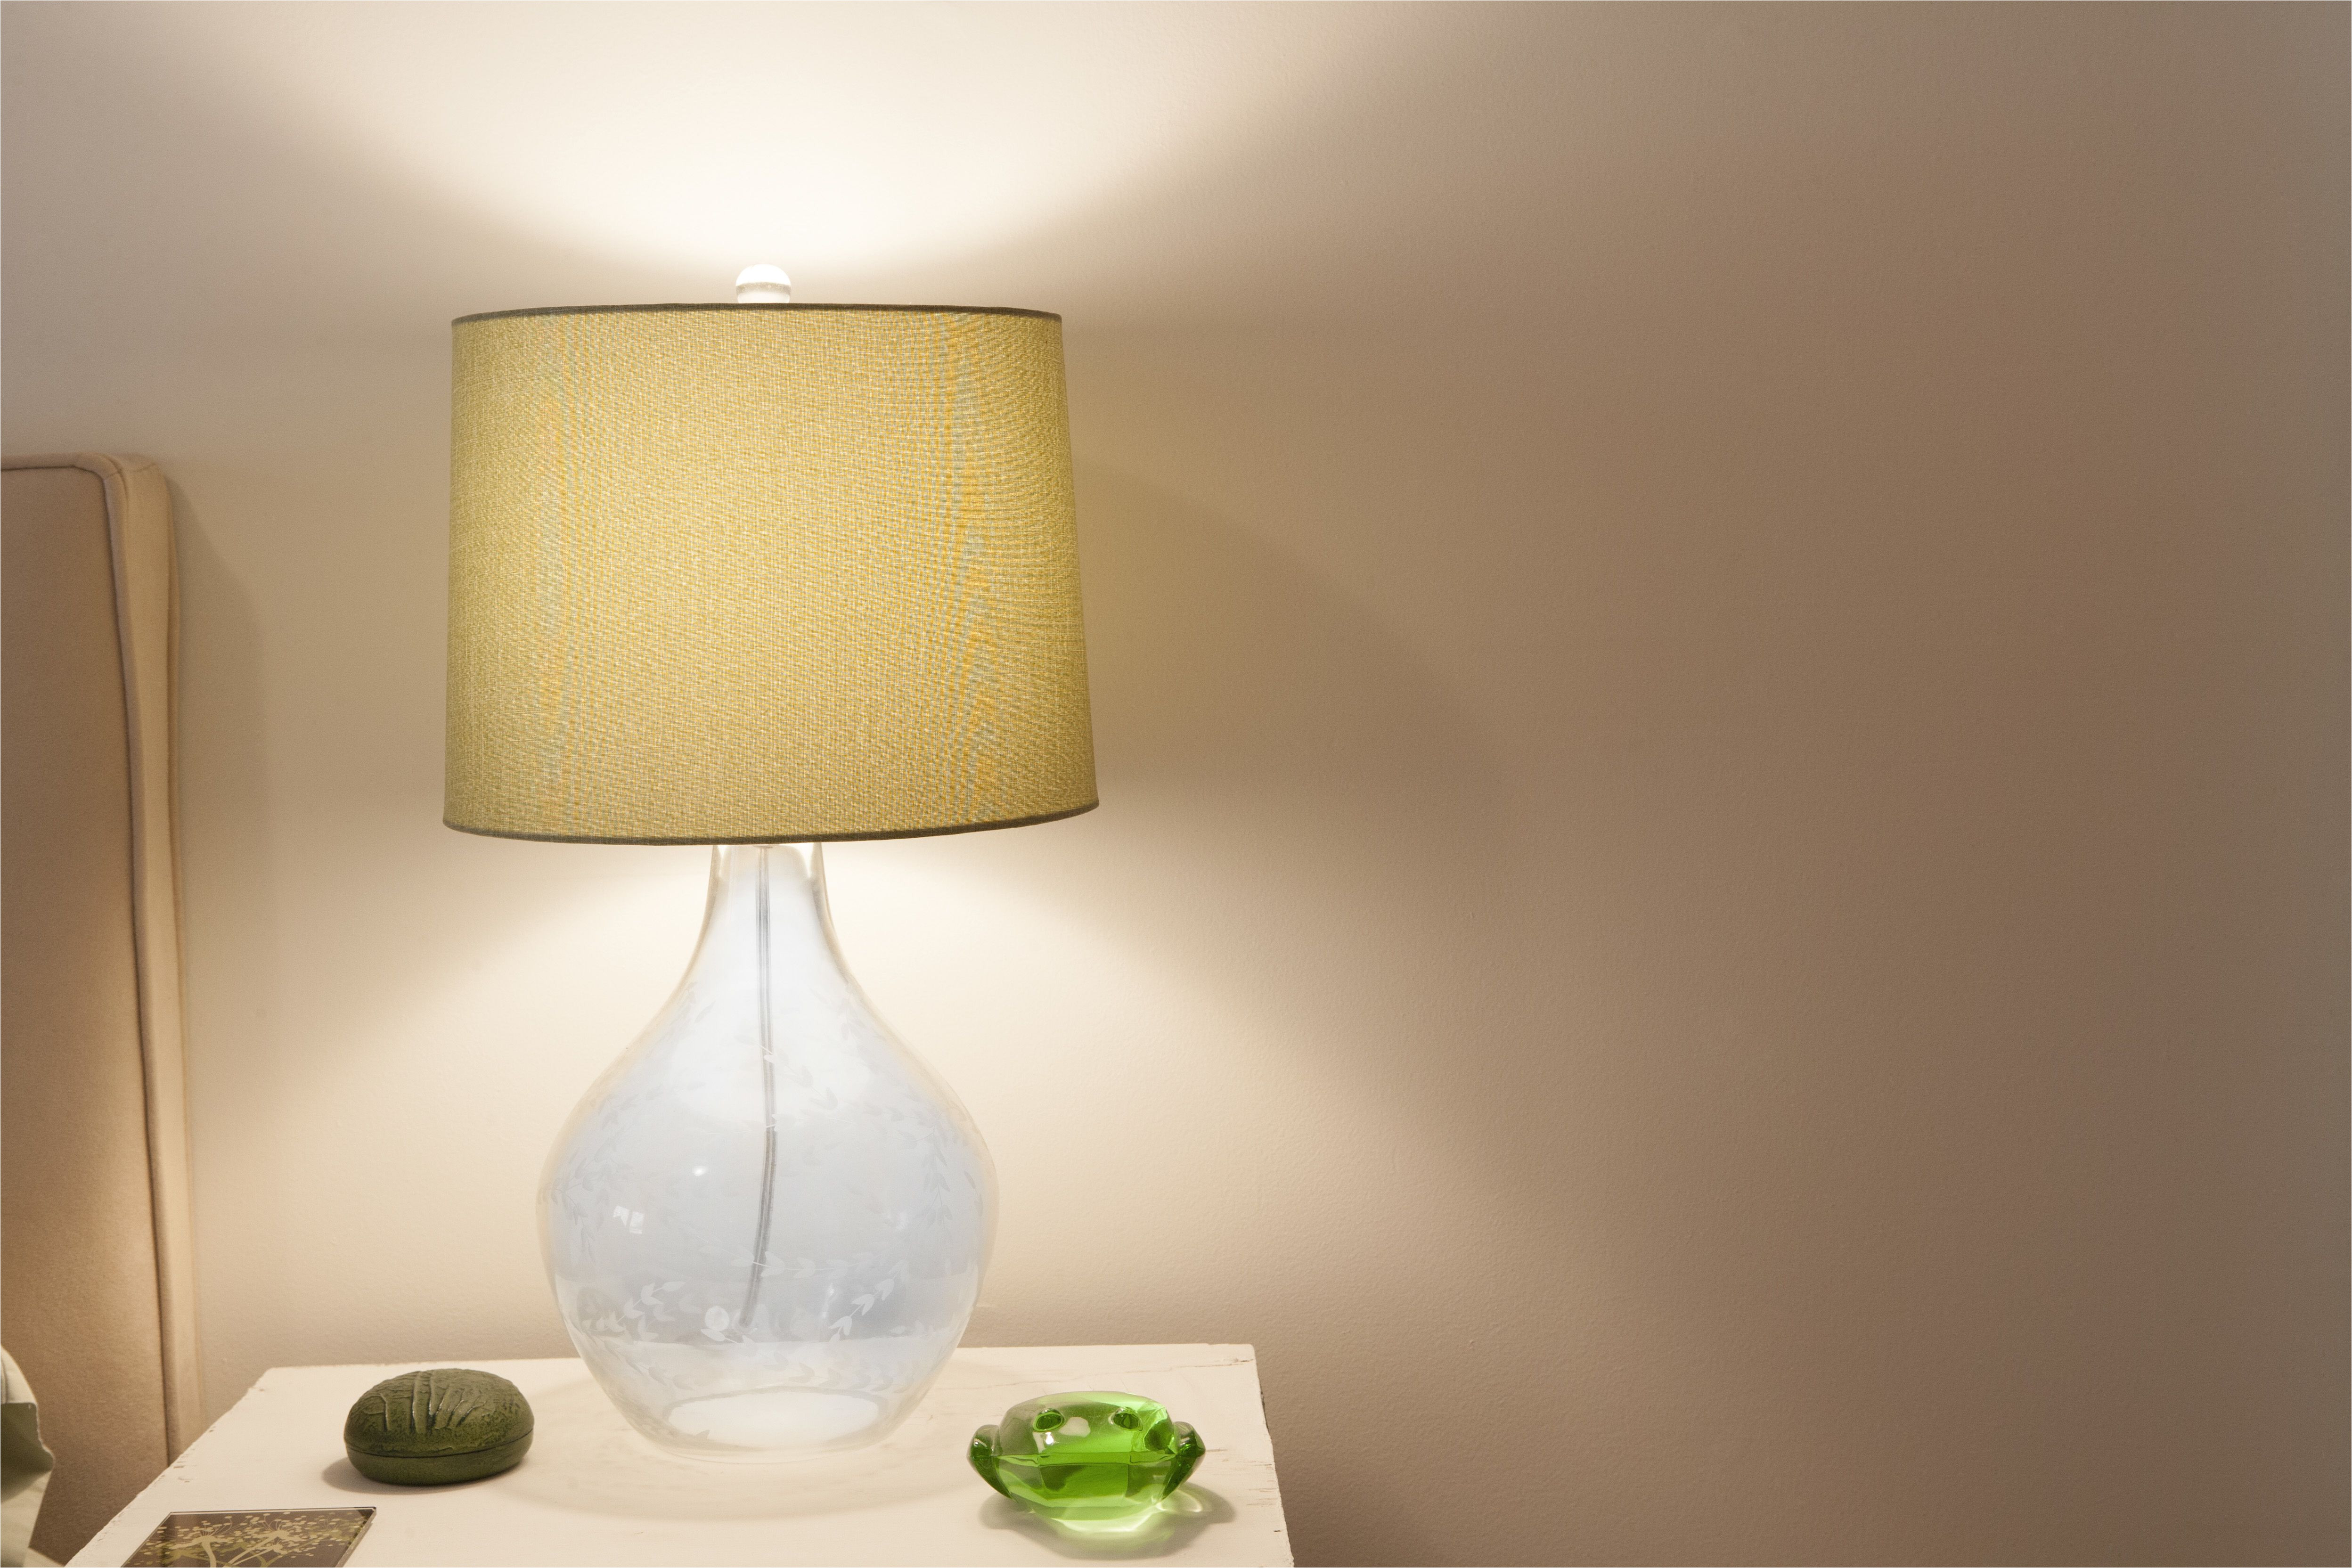 illuminated glass bedroom lamp on side table 596137996 5a035fd4ec2f6400372dbc03 jpg